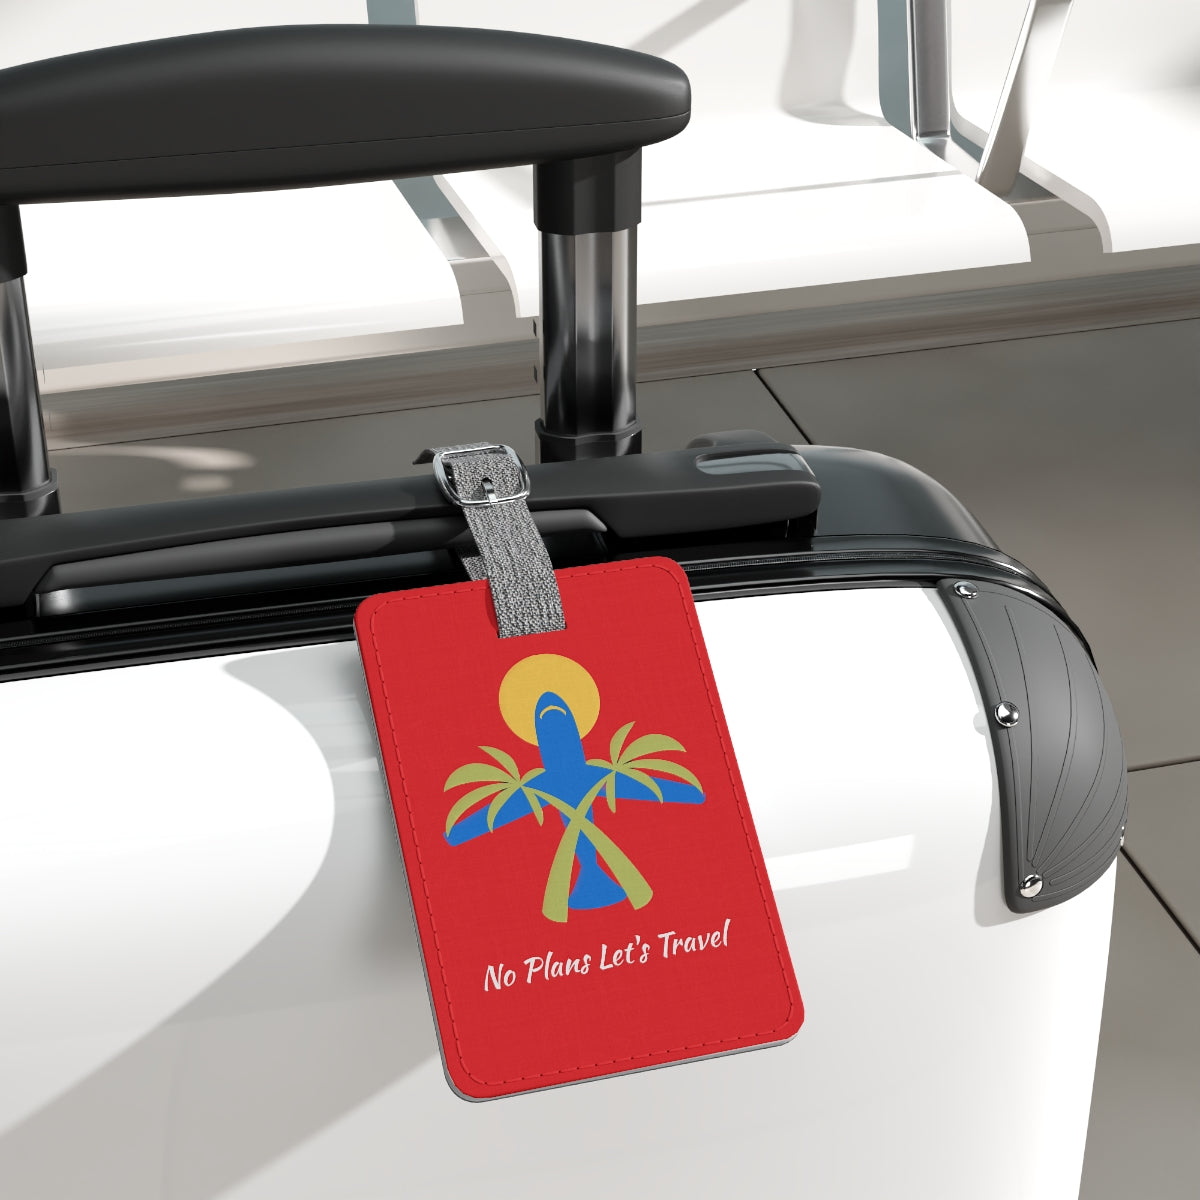 TRTL Travel Luggage Tag | Travel Luggage Tag | Airplane Luggage Tag | Luggage Tag for Travel